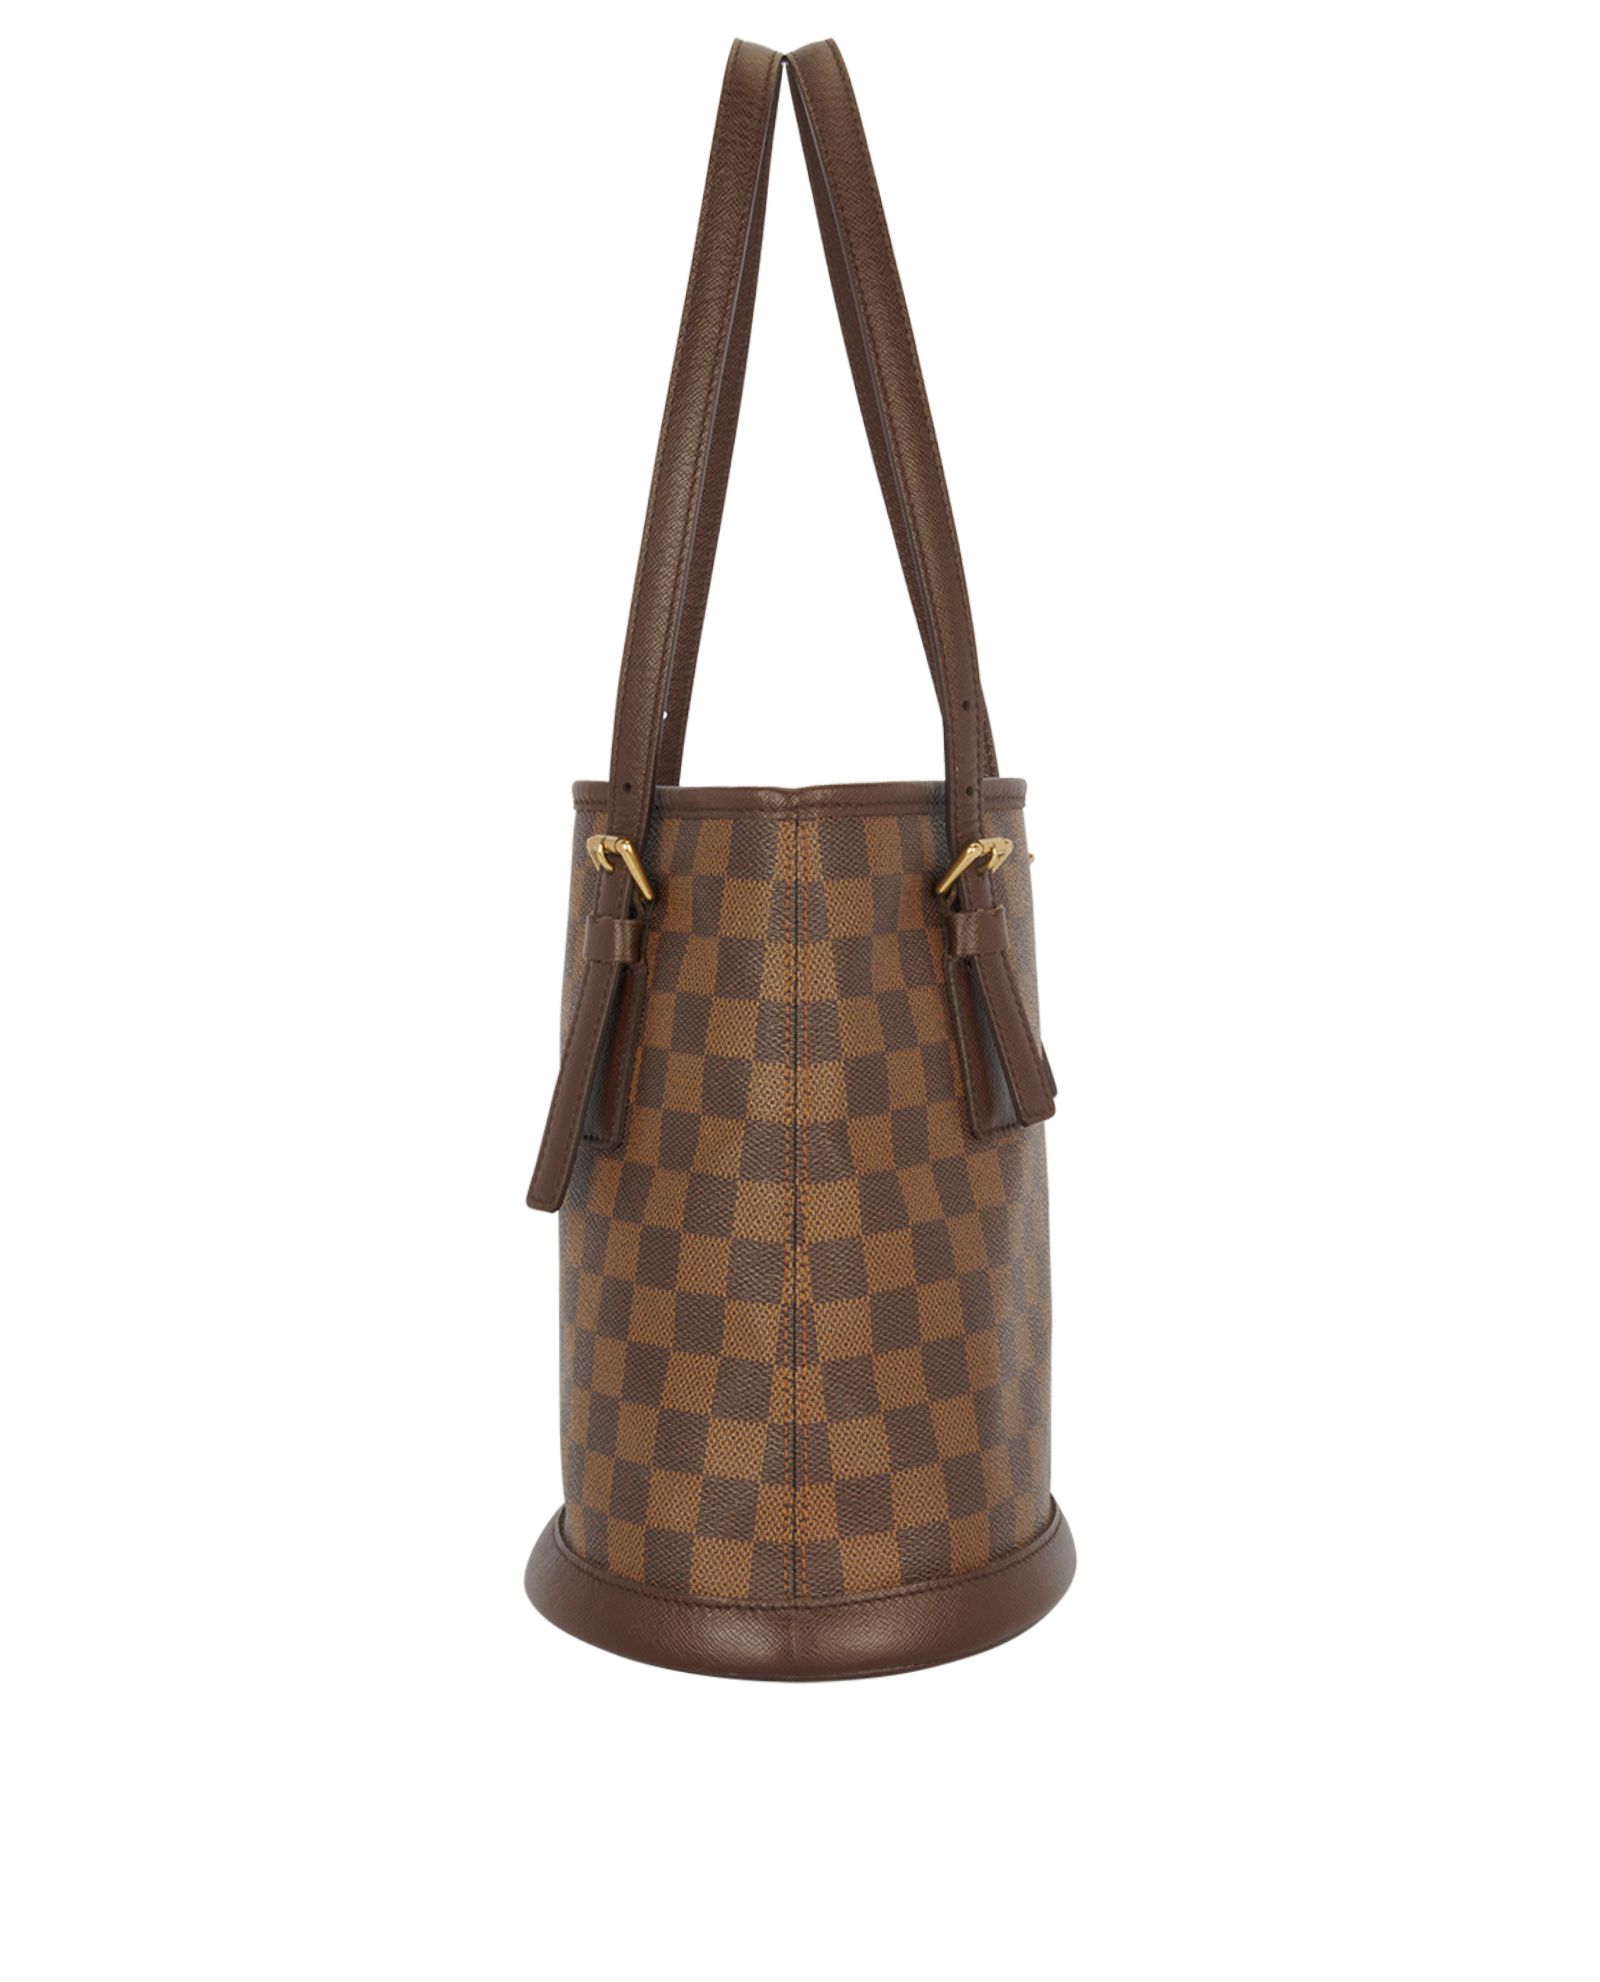 ViaAnabel - Simple yet stylish, this Marais bucket bag is by Louis